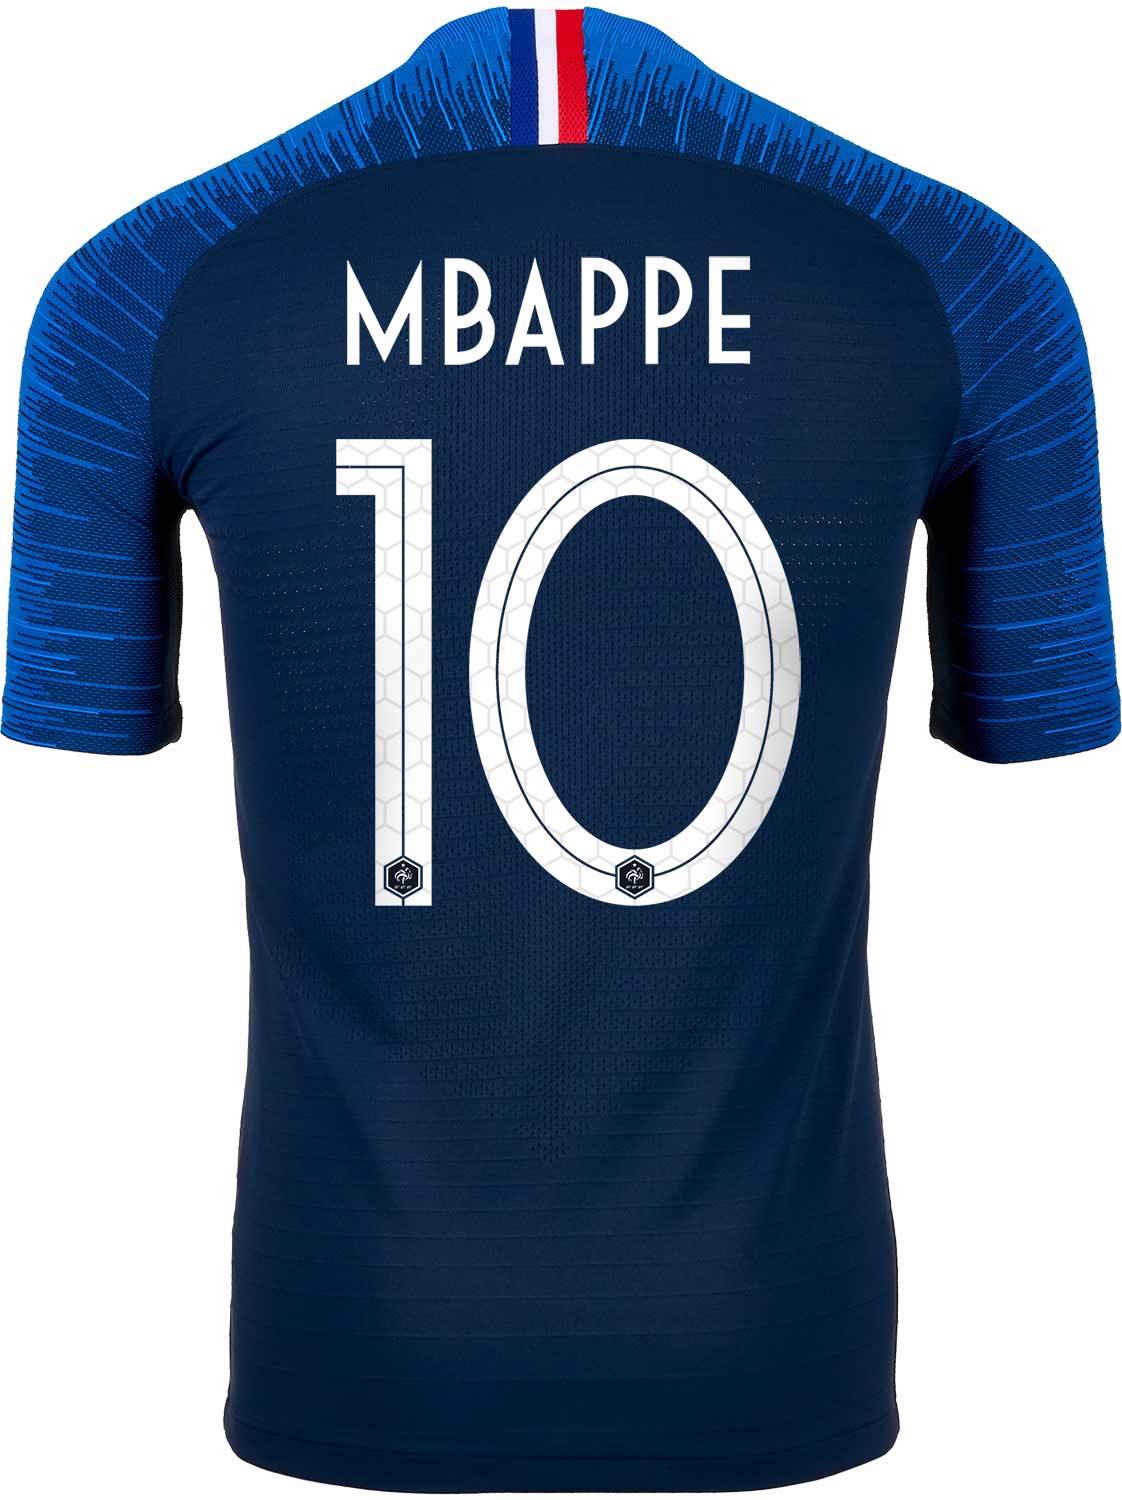 2018/19 Nike Kylian Mbappe France Home Match Jersey  SoccerPro